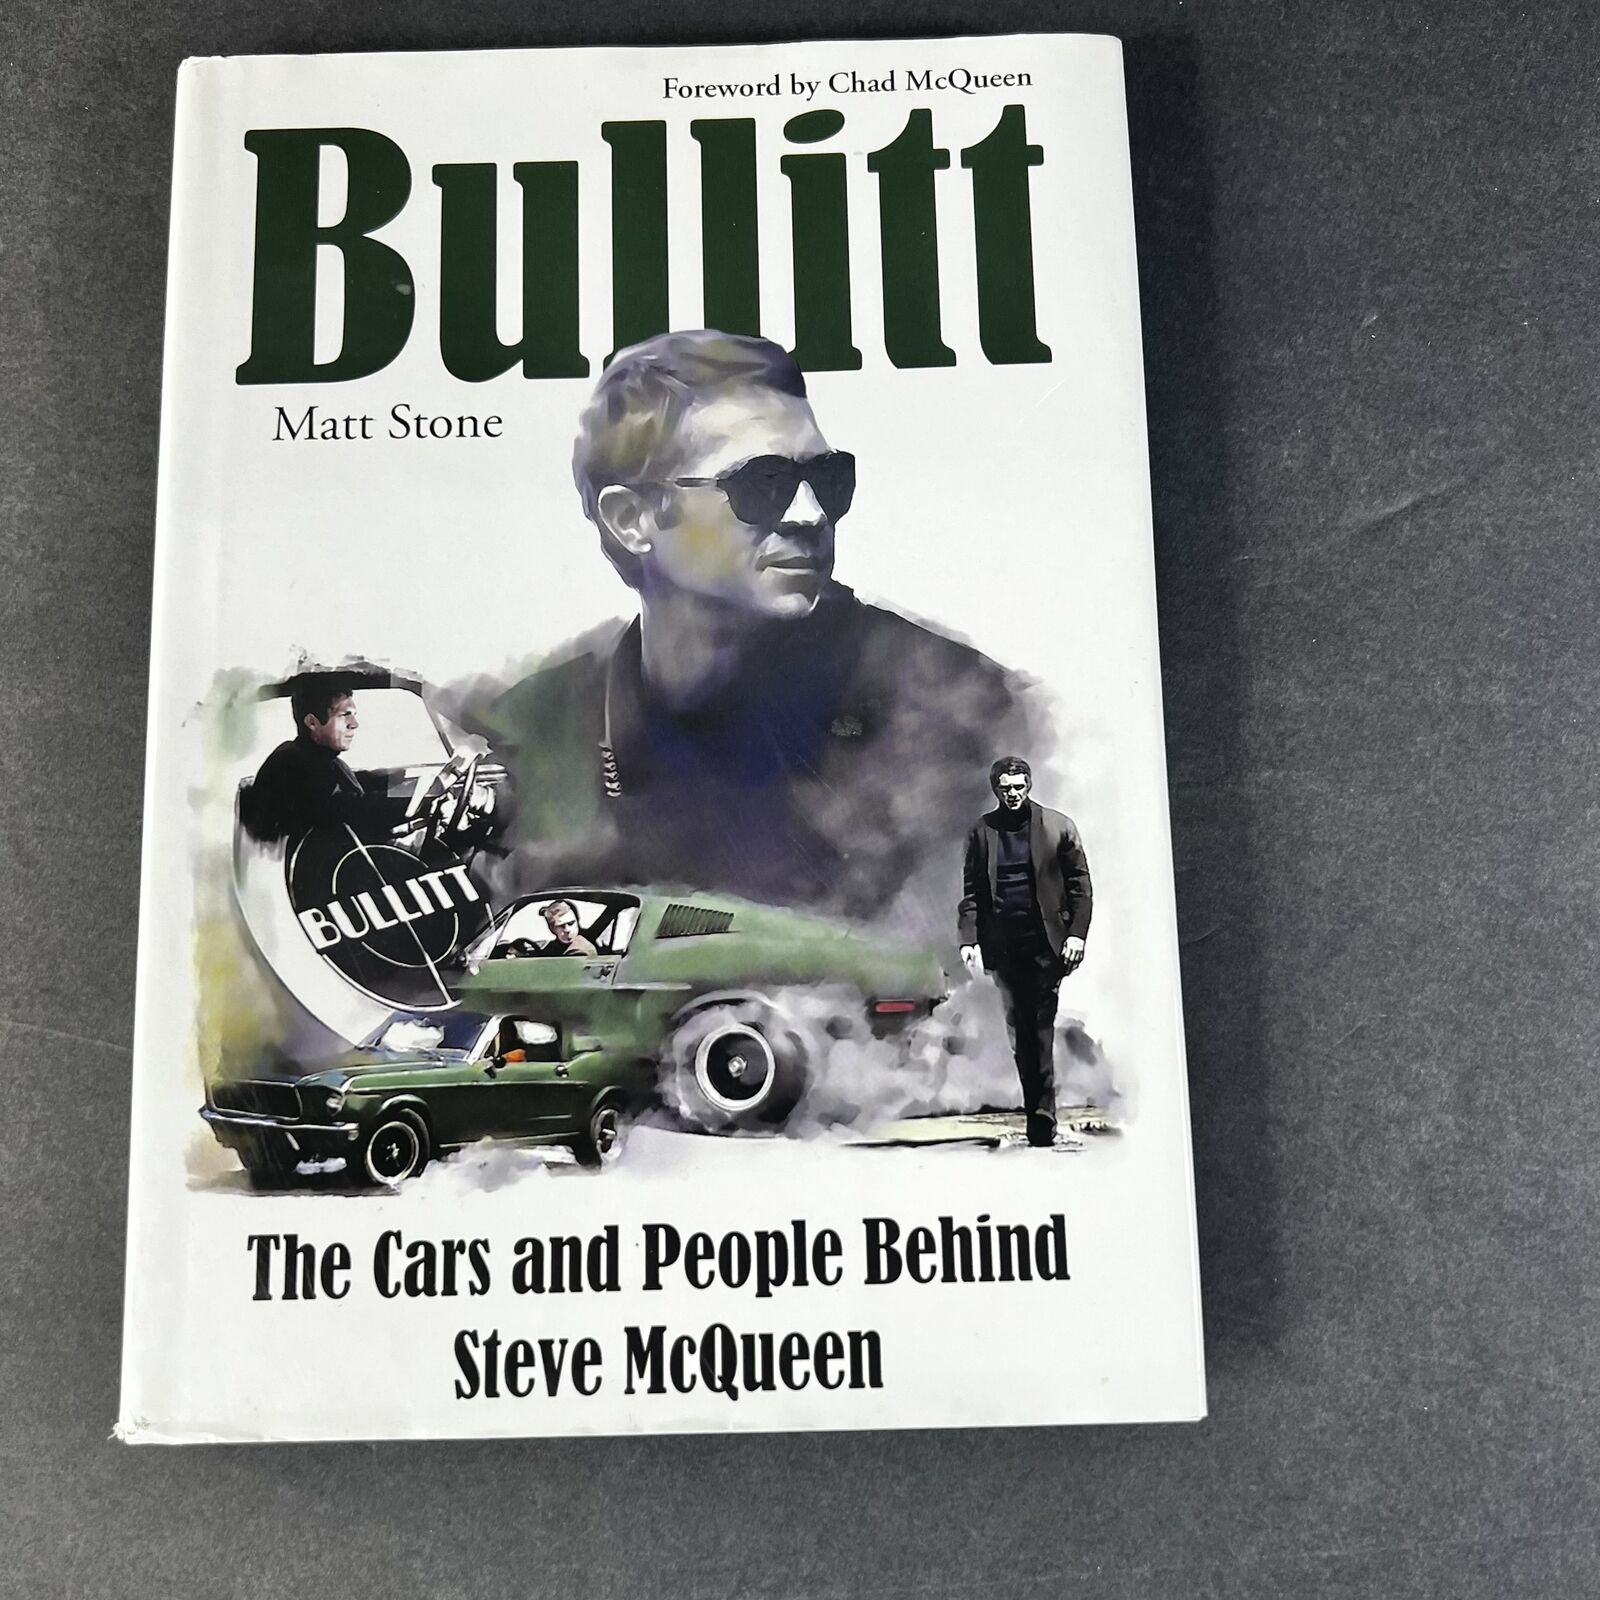 Bullitt The Cars and People Behind Steve Mcqueen Signed Matt Stone, Chad McQueen